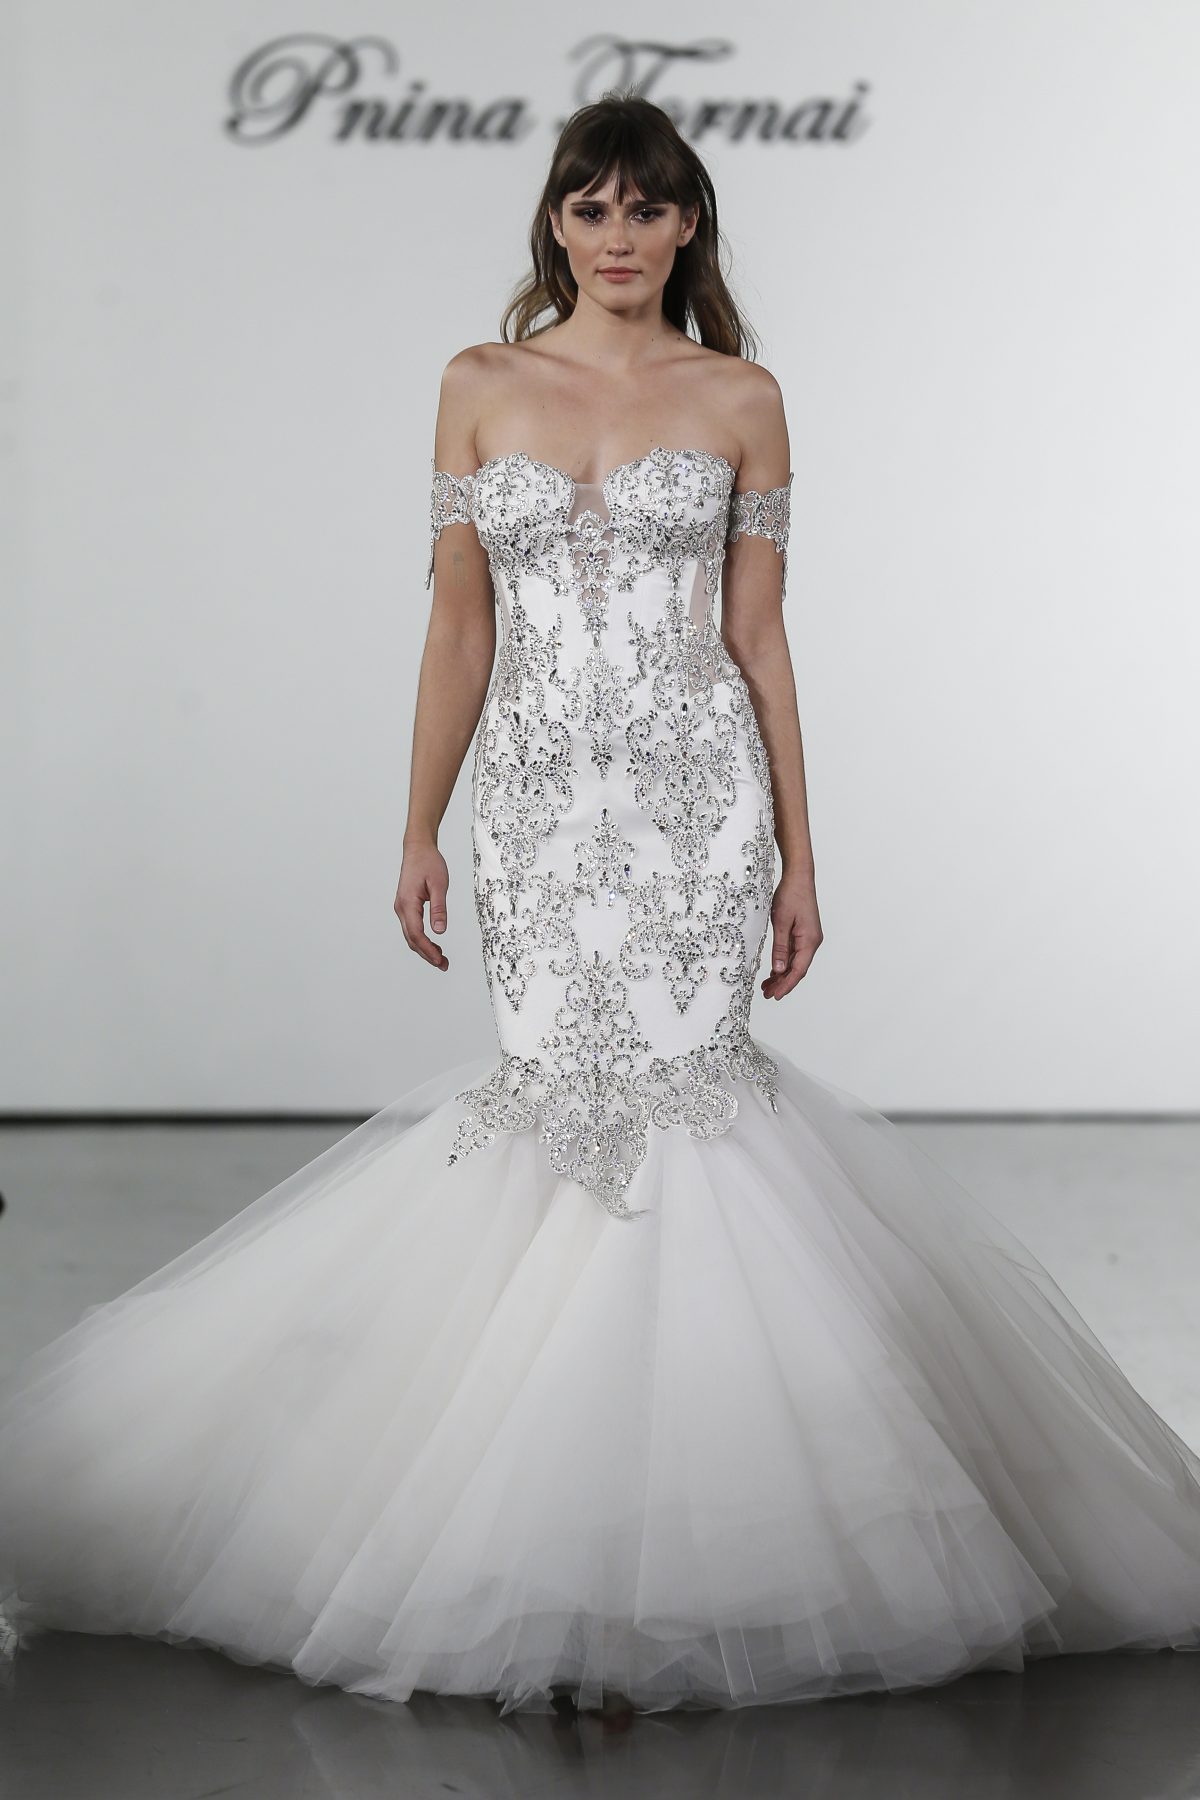 Crystal Embellished Mermaid Tulle Skirt Wedding Dress Kleinfeld Bridal 4143